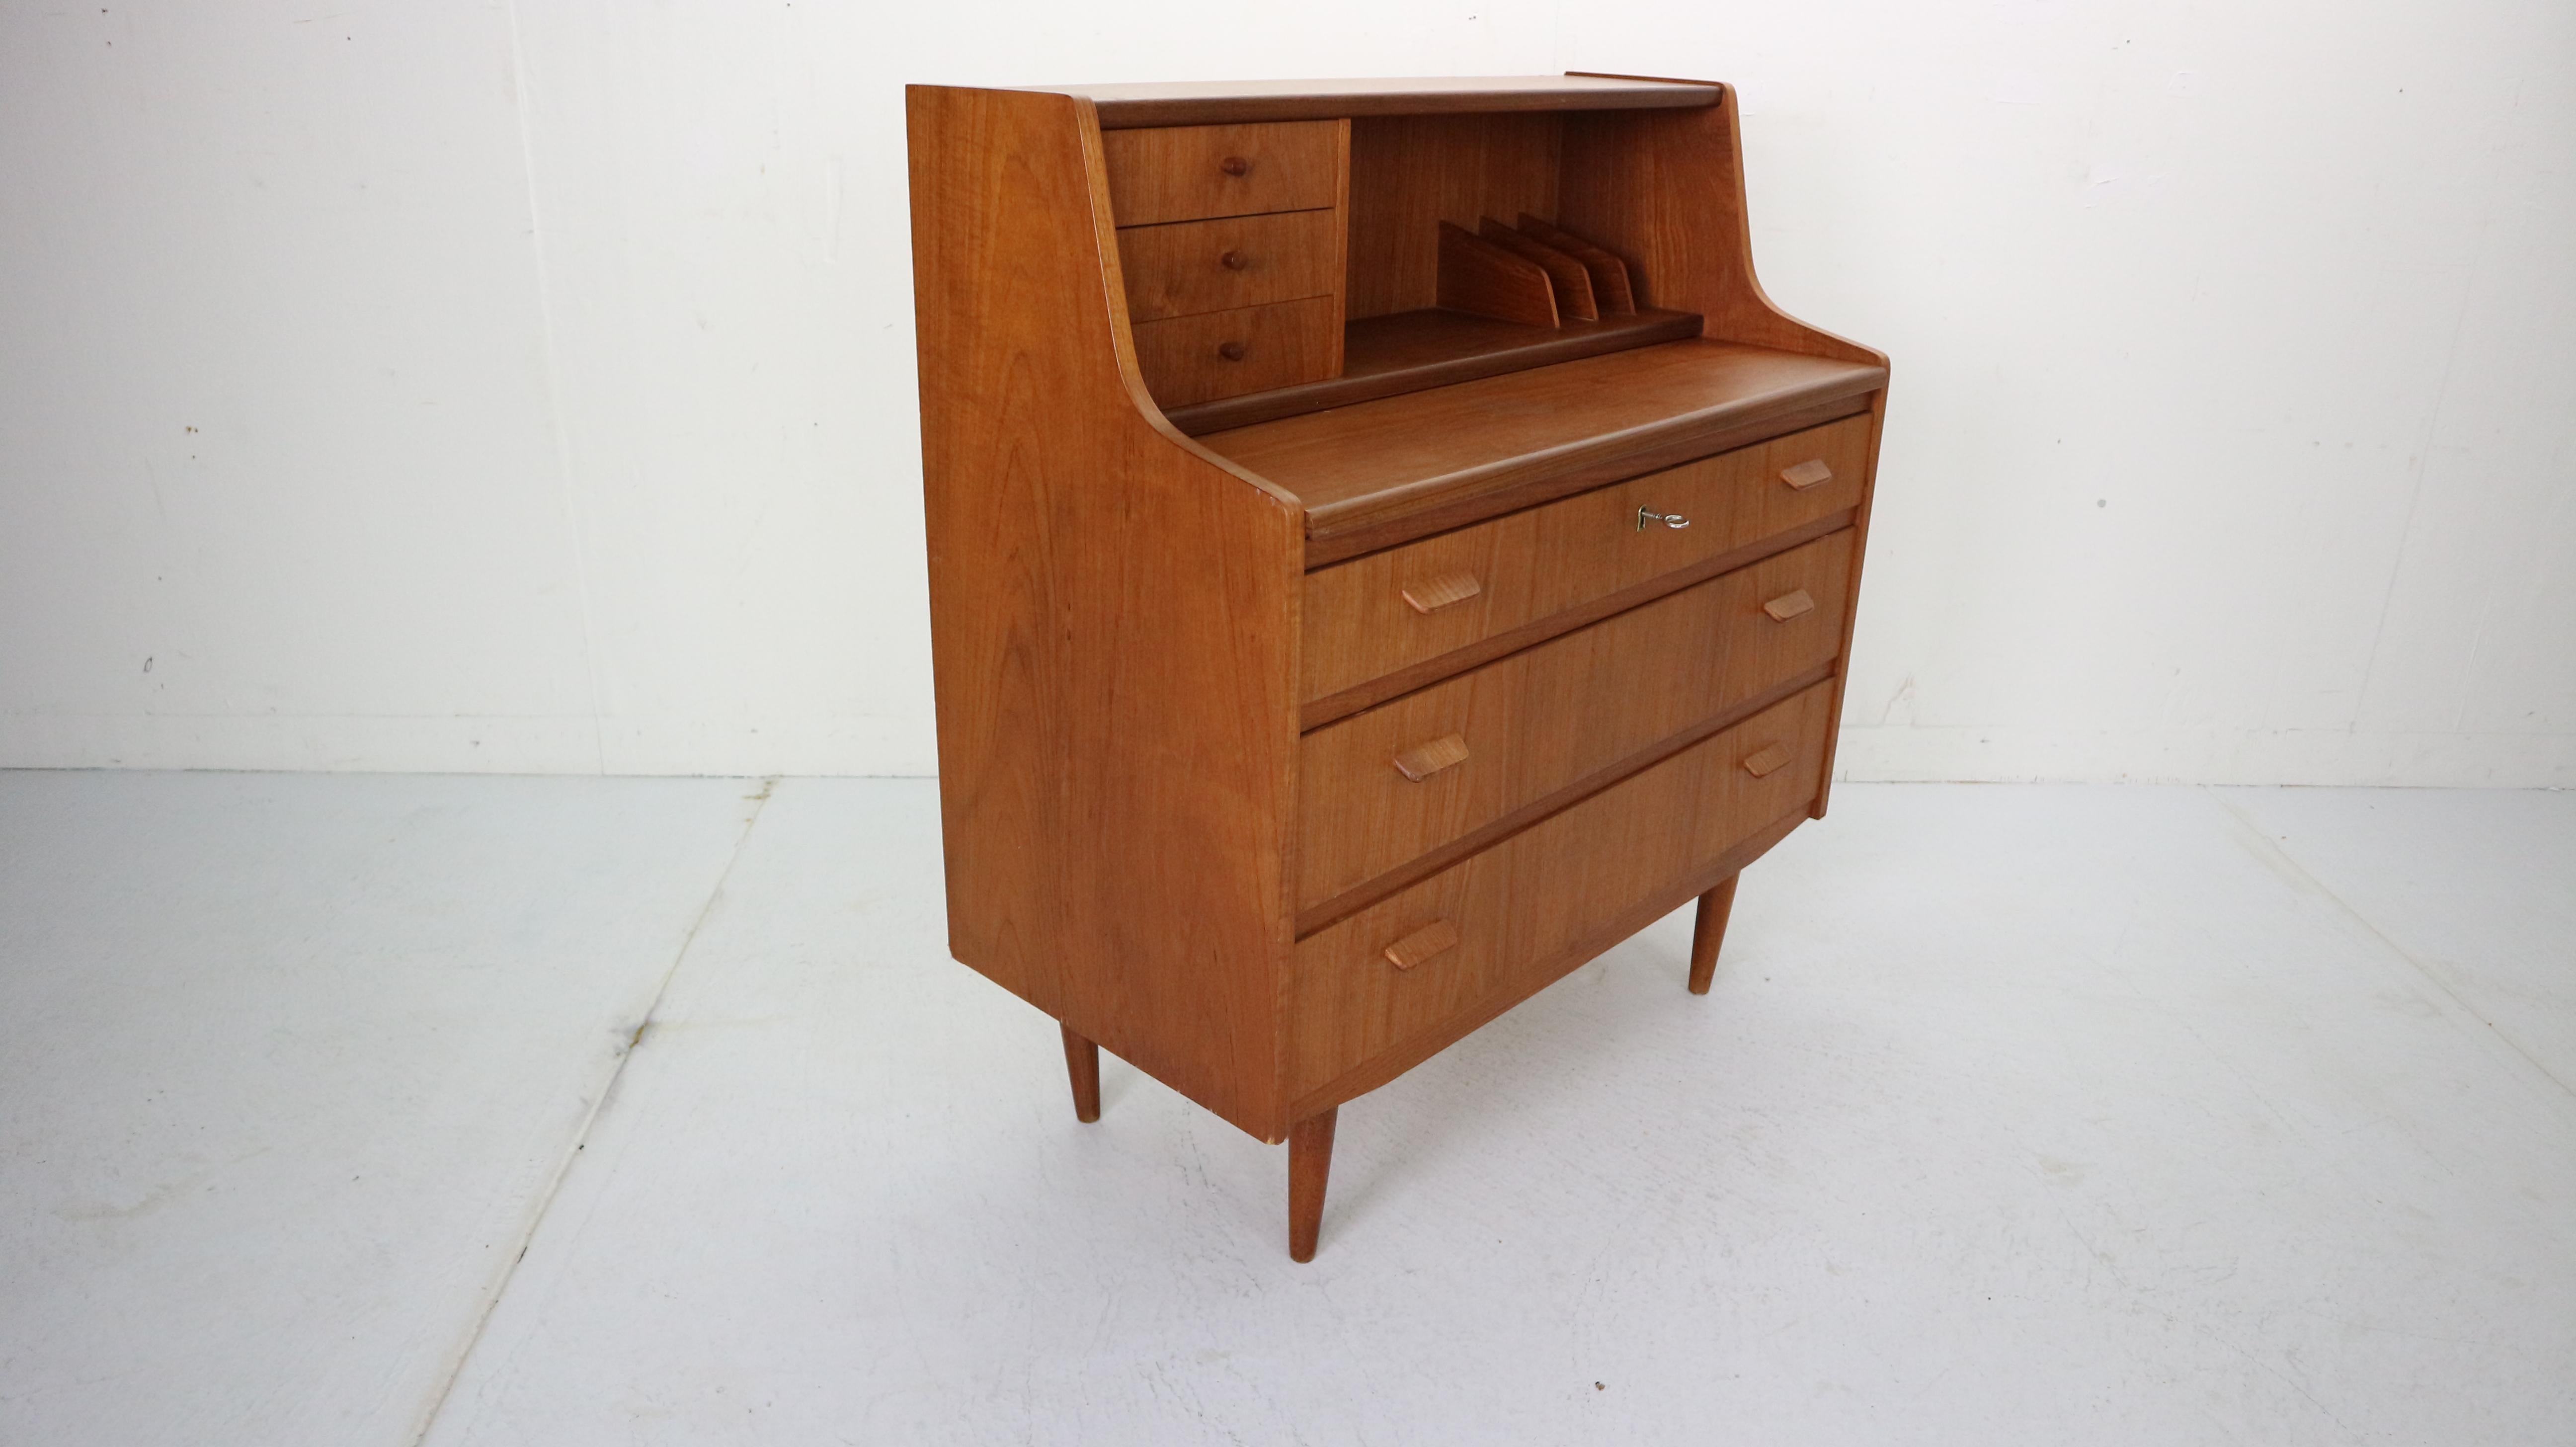 Midcentury Danish Modern Teak Wood Secretary Desk, Chest of Drawers, 1960s (Mitte des 20. Jahrhunderts)